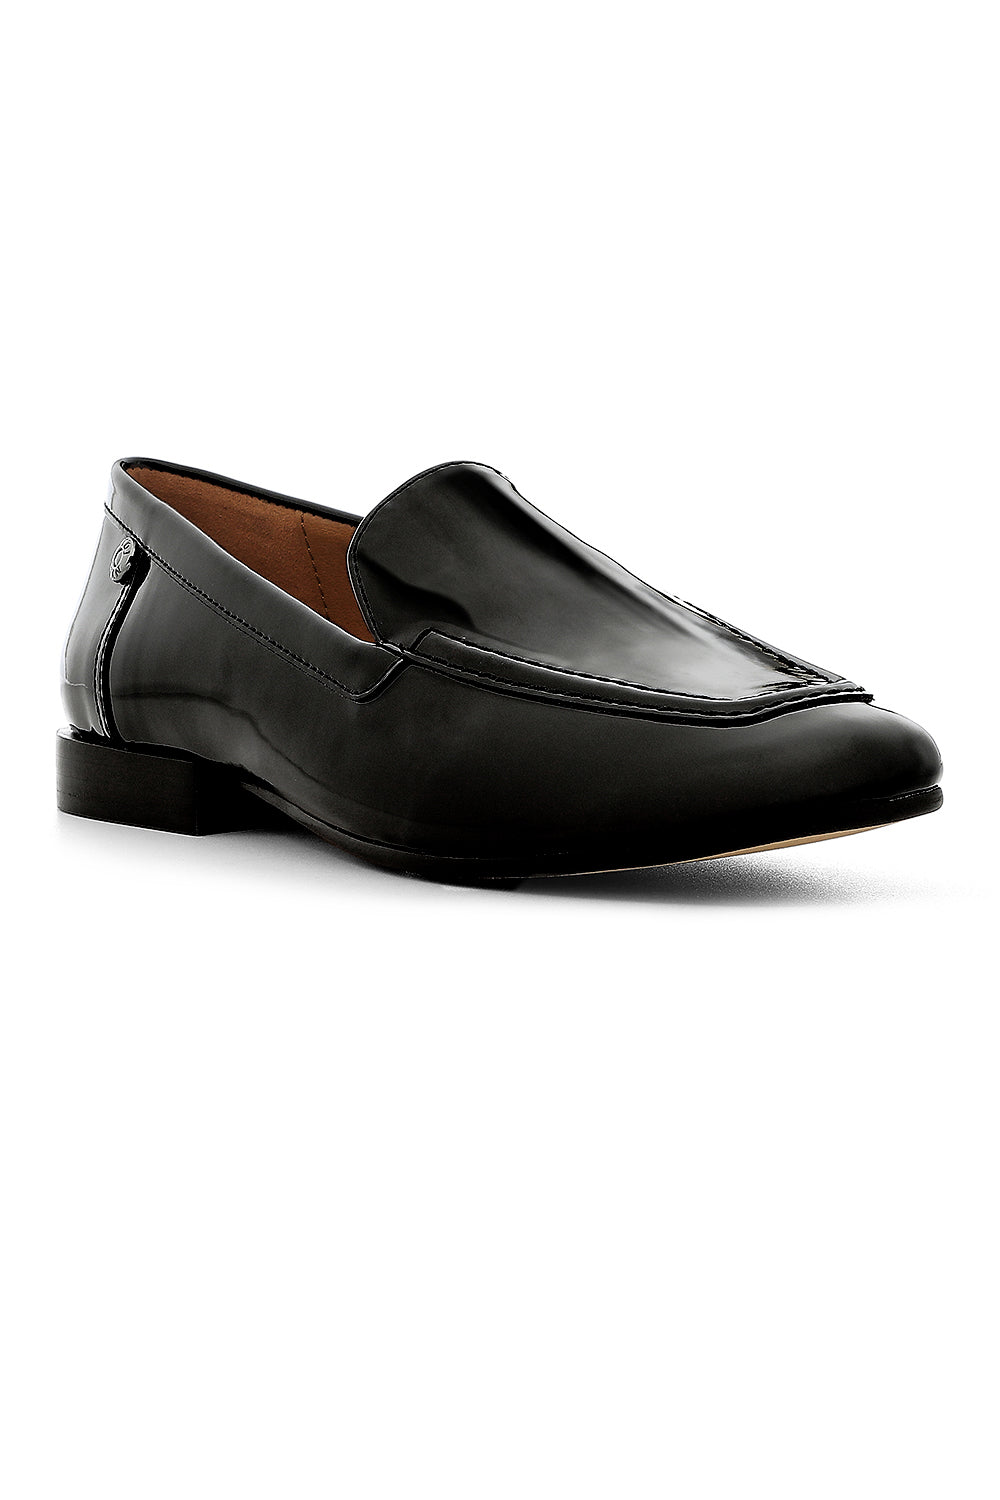 NYDJ Lynn Slip-On Loafers In Soft Patent - Black